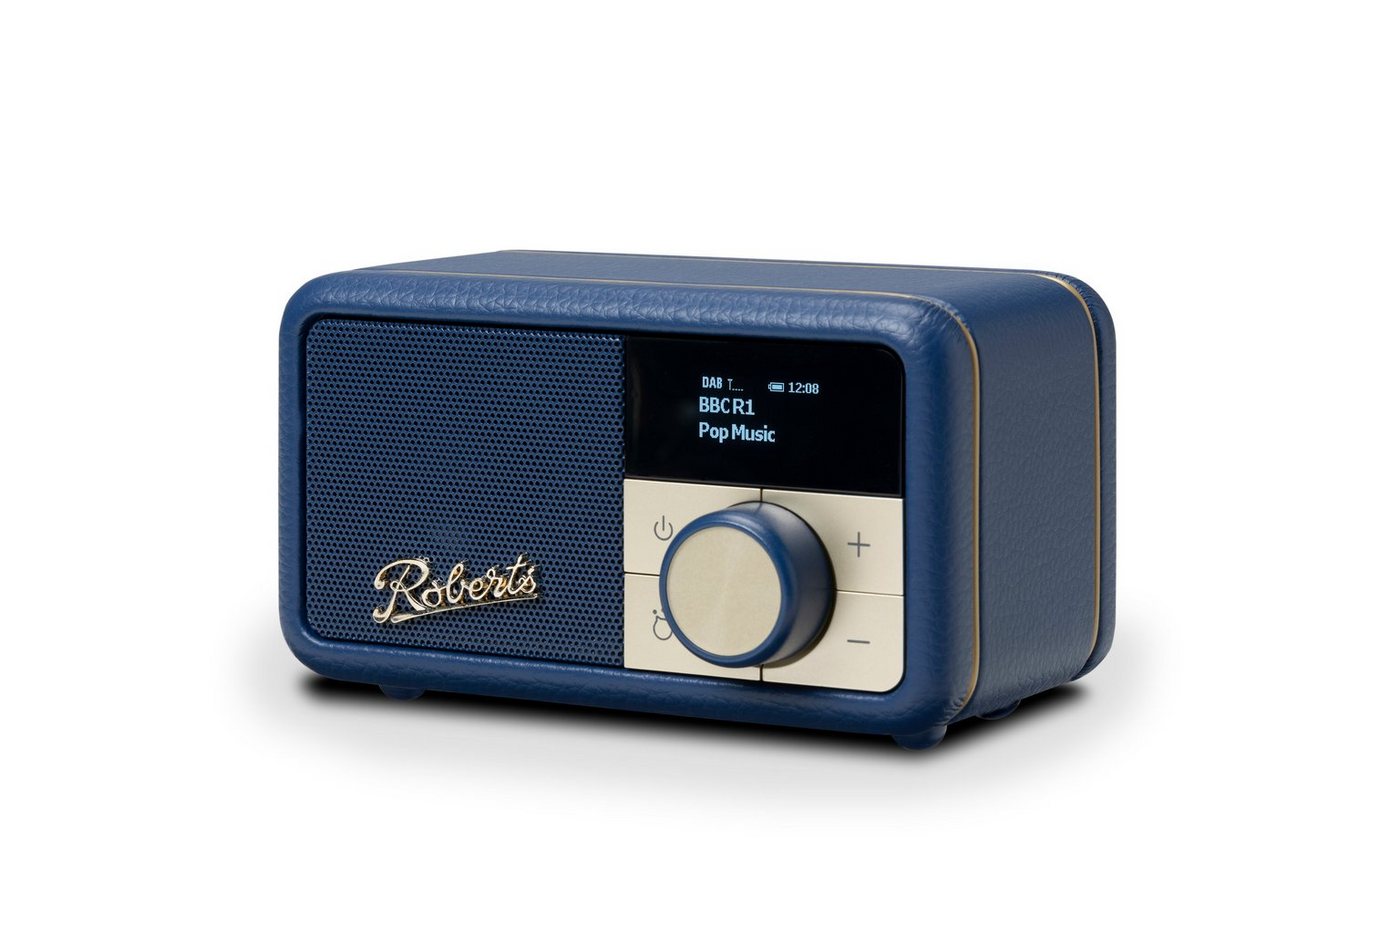 ROBERTS Revival Petite, midnight blue, tragbares FM / DA Digitalradio (DAB) von ROBERTS